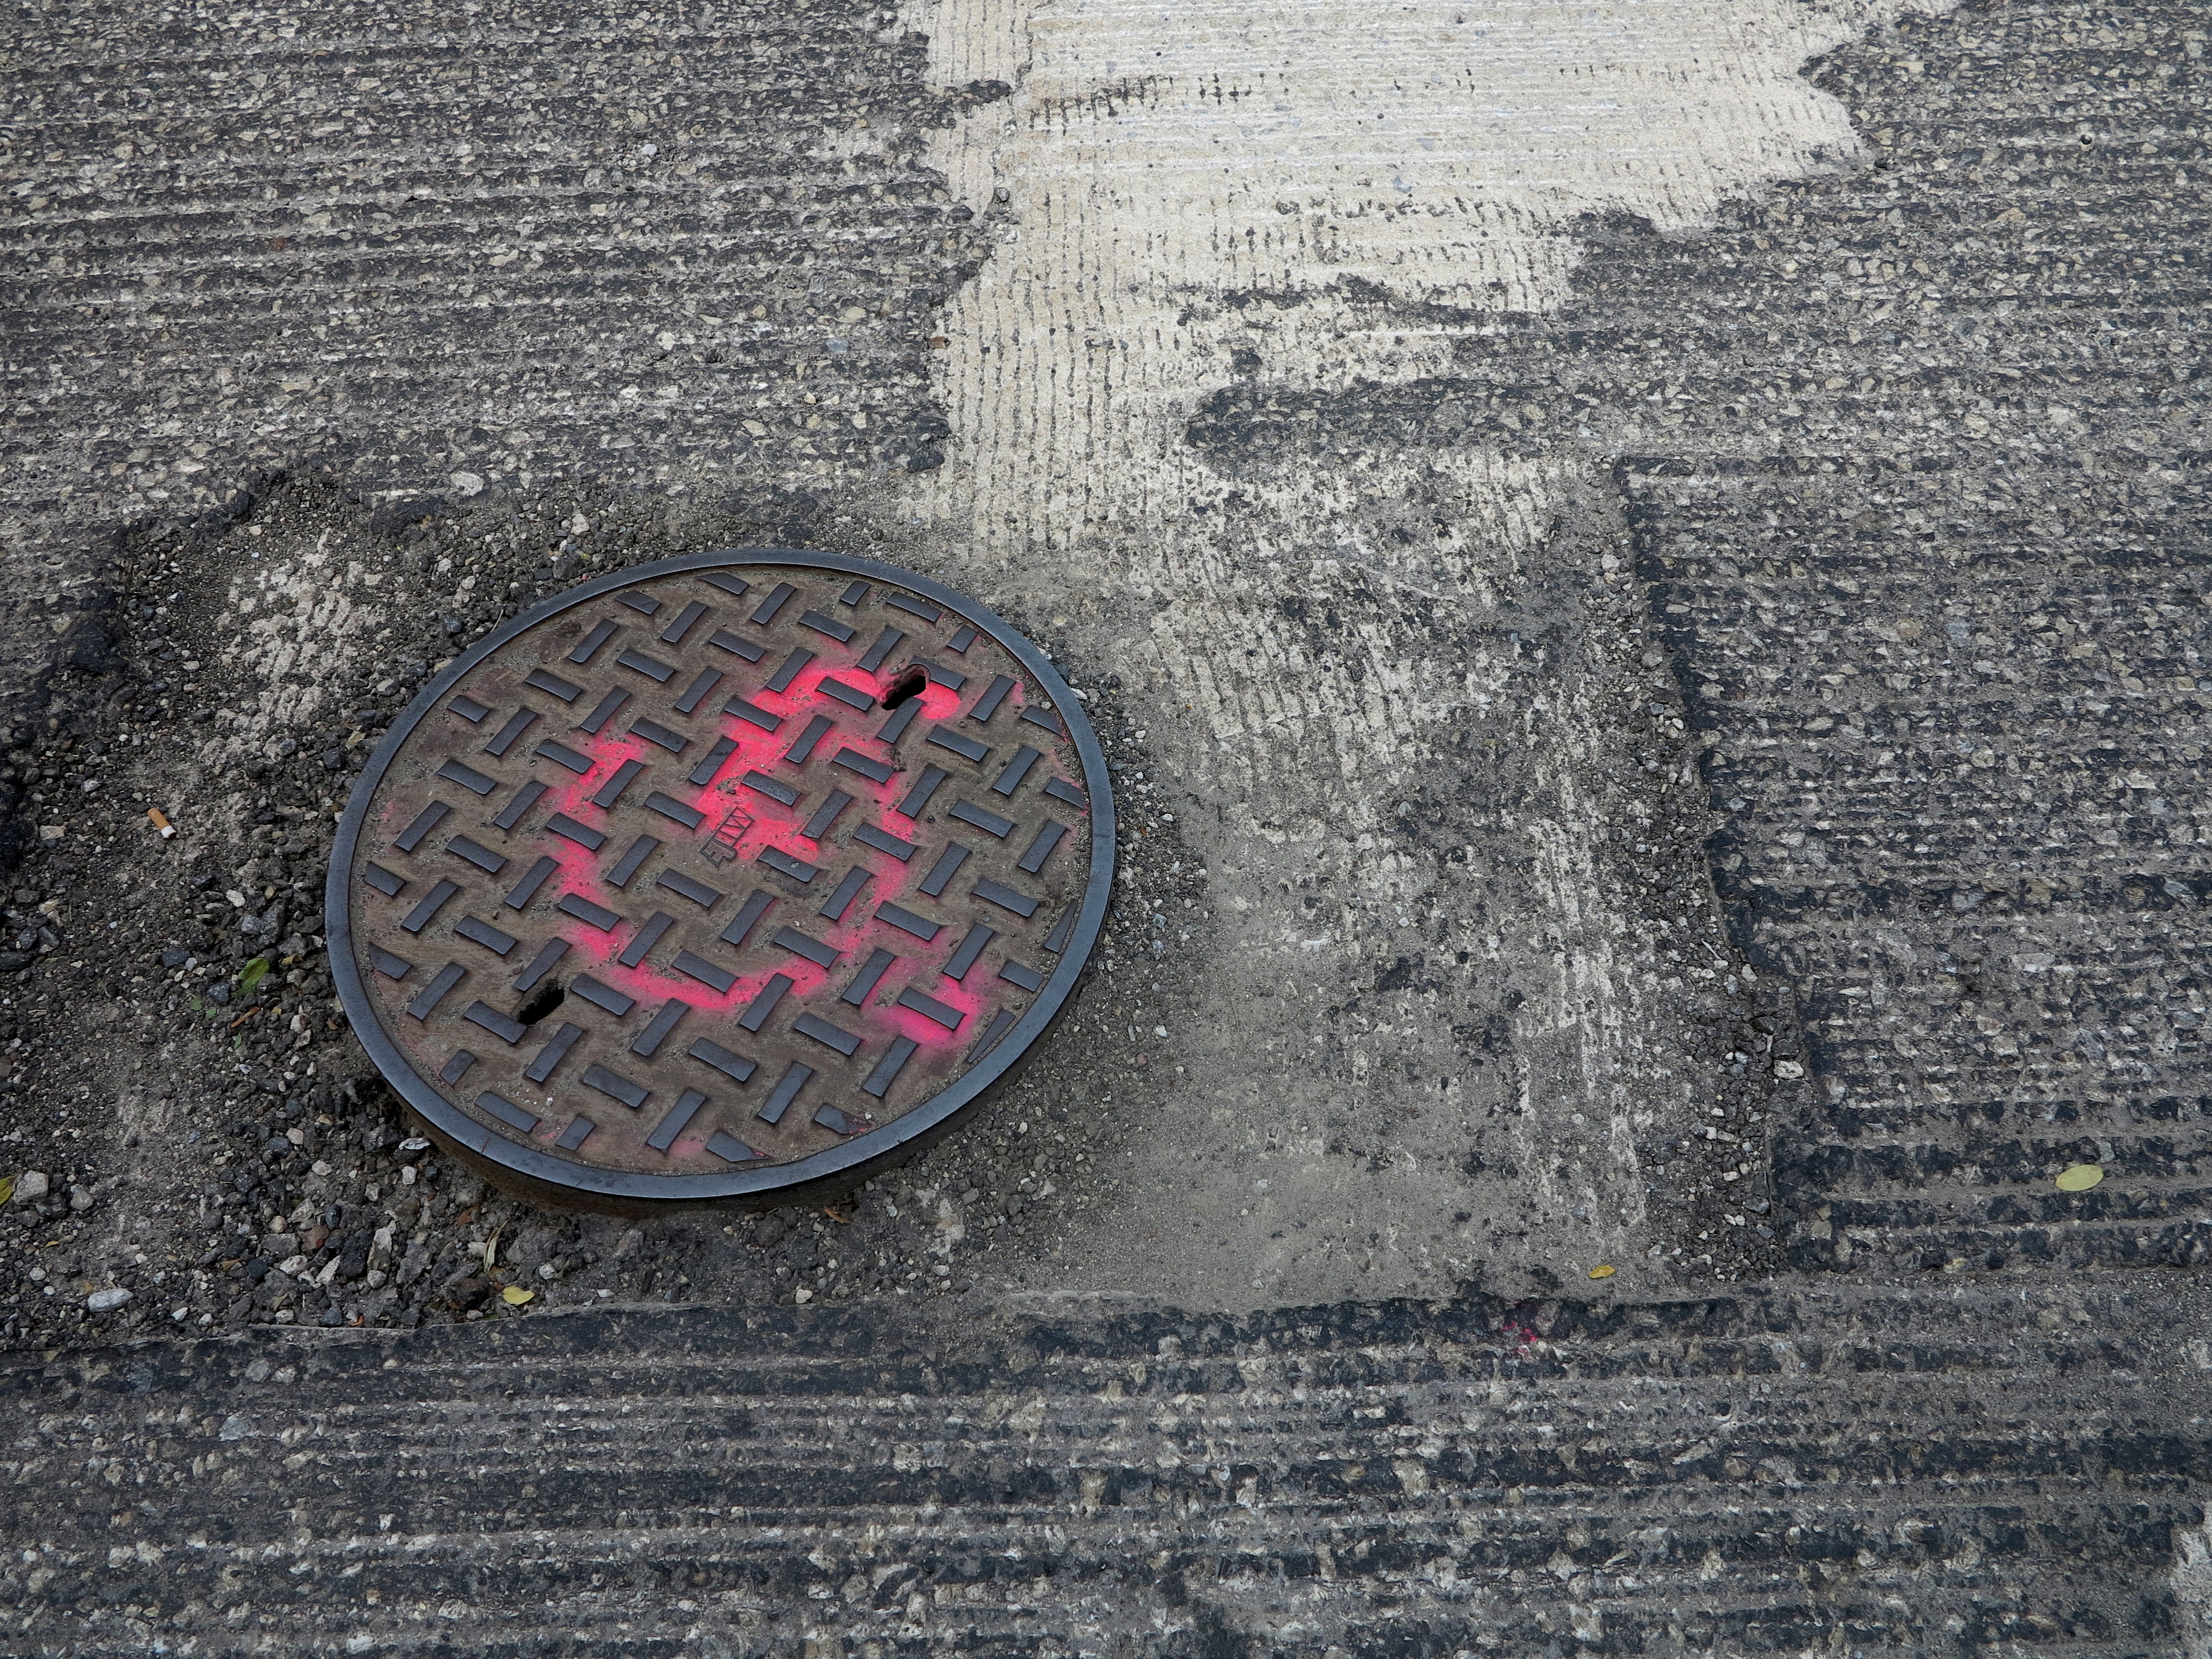 Manhole covers will be reset before resurfacing.